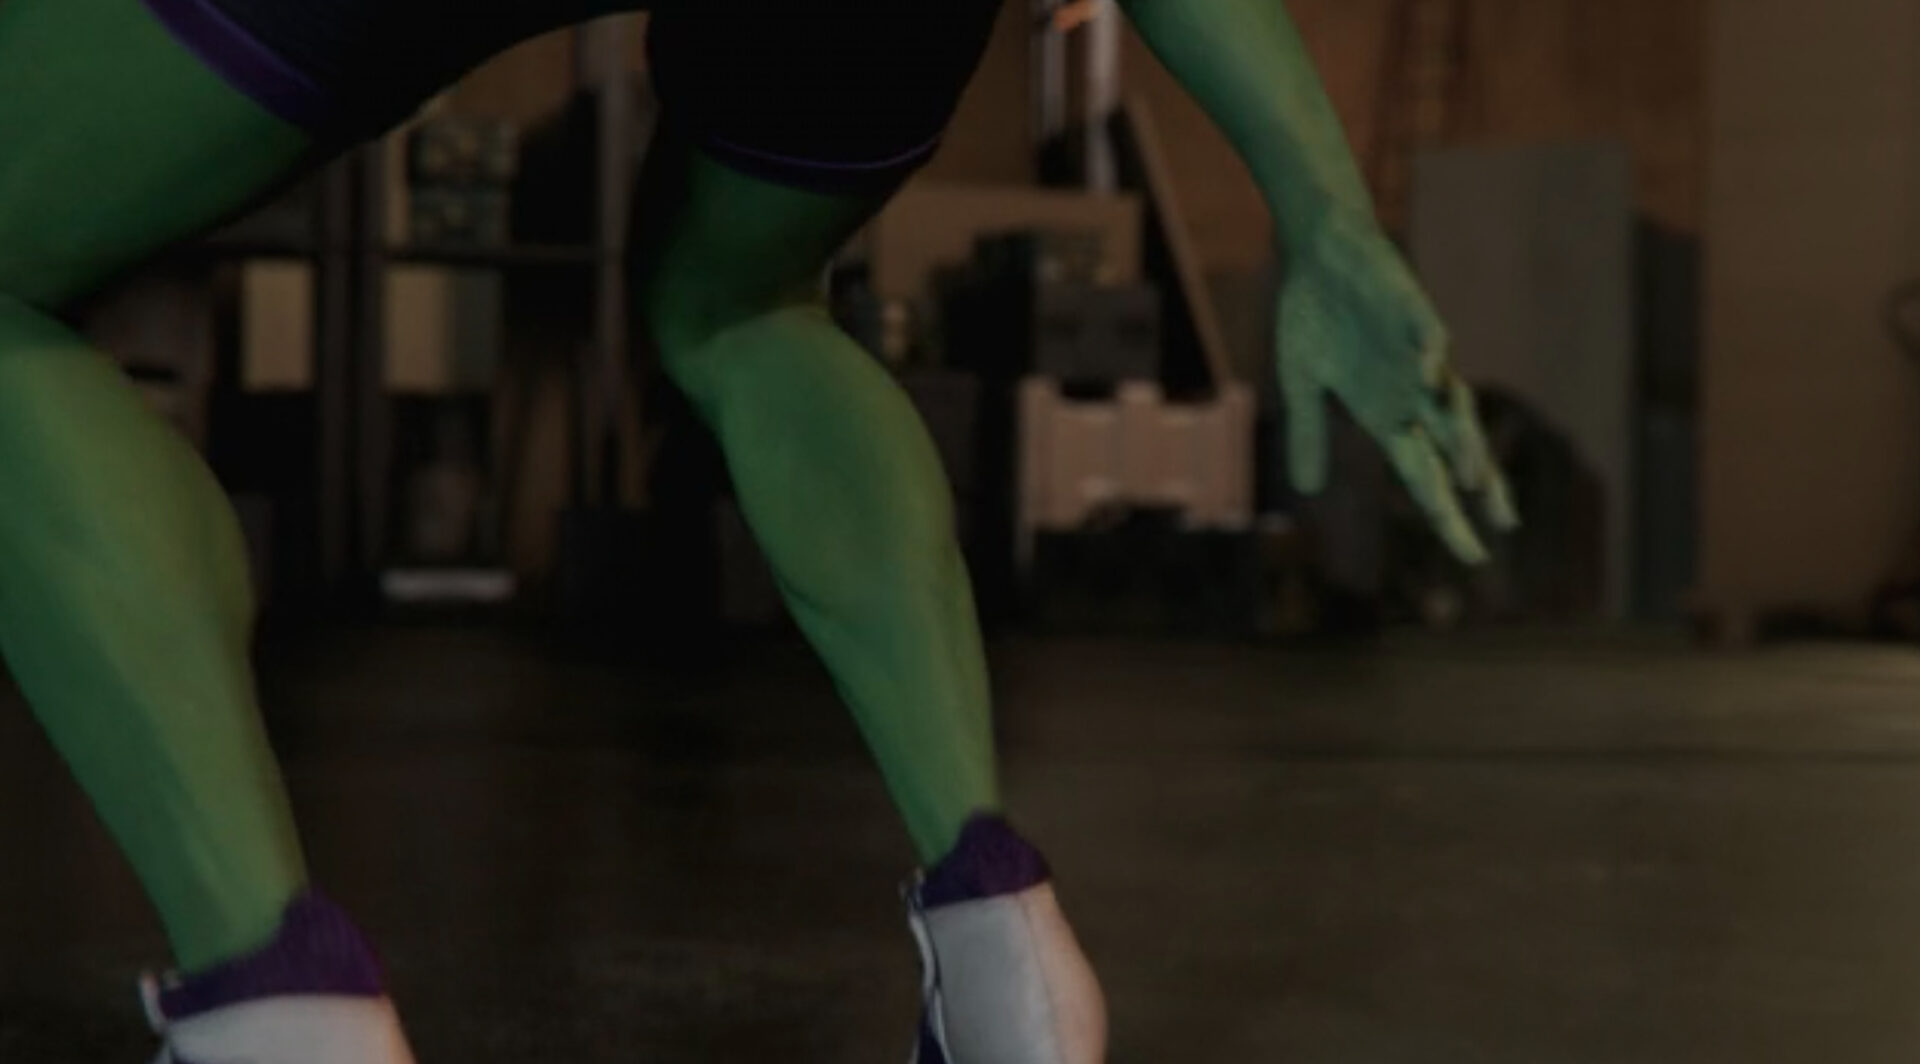 A peek at Jennifer Walter (Tatiana Maslany) and her green legs post transformation in a still from the Disney+ series "She-Hulk."